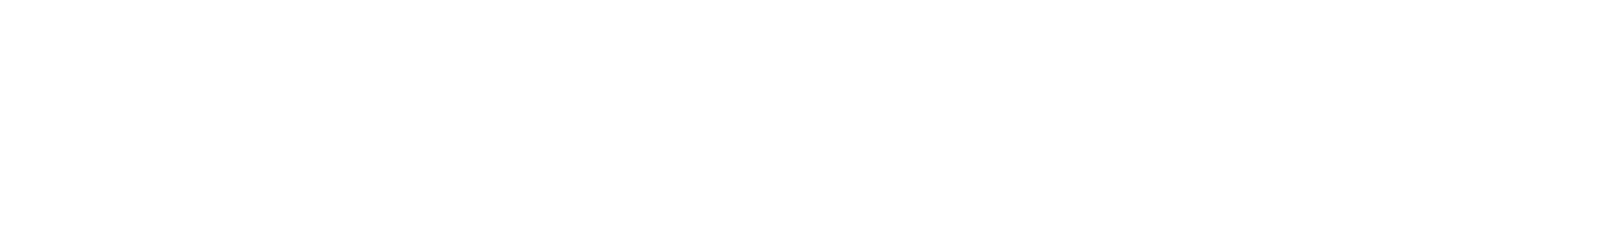 GEOX logo large for dark backgrounds (transparent PNG)